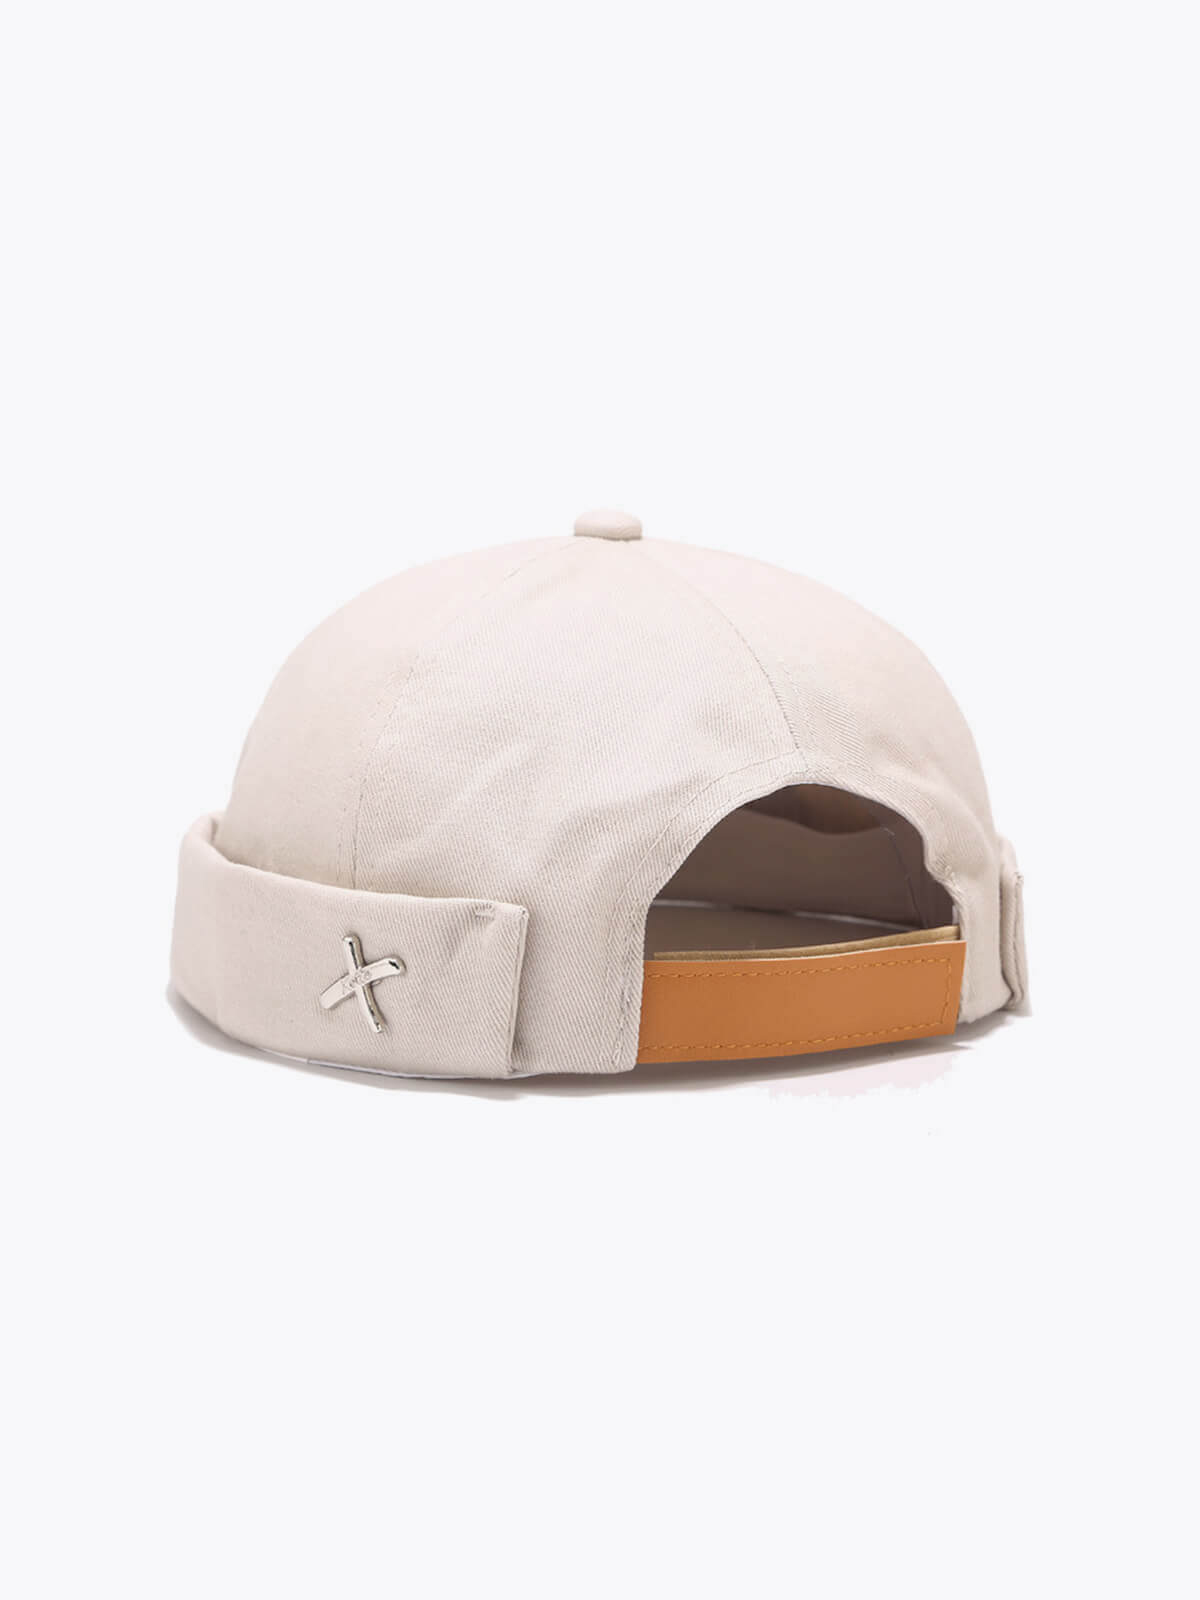 Retro X White Docker Hat - Docker Hats